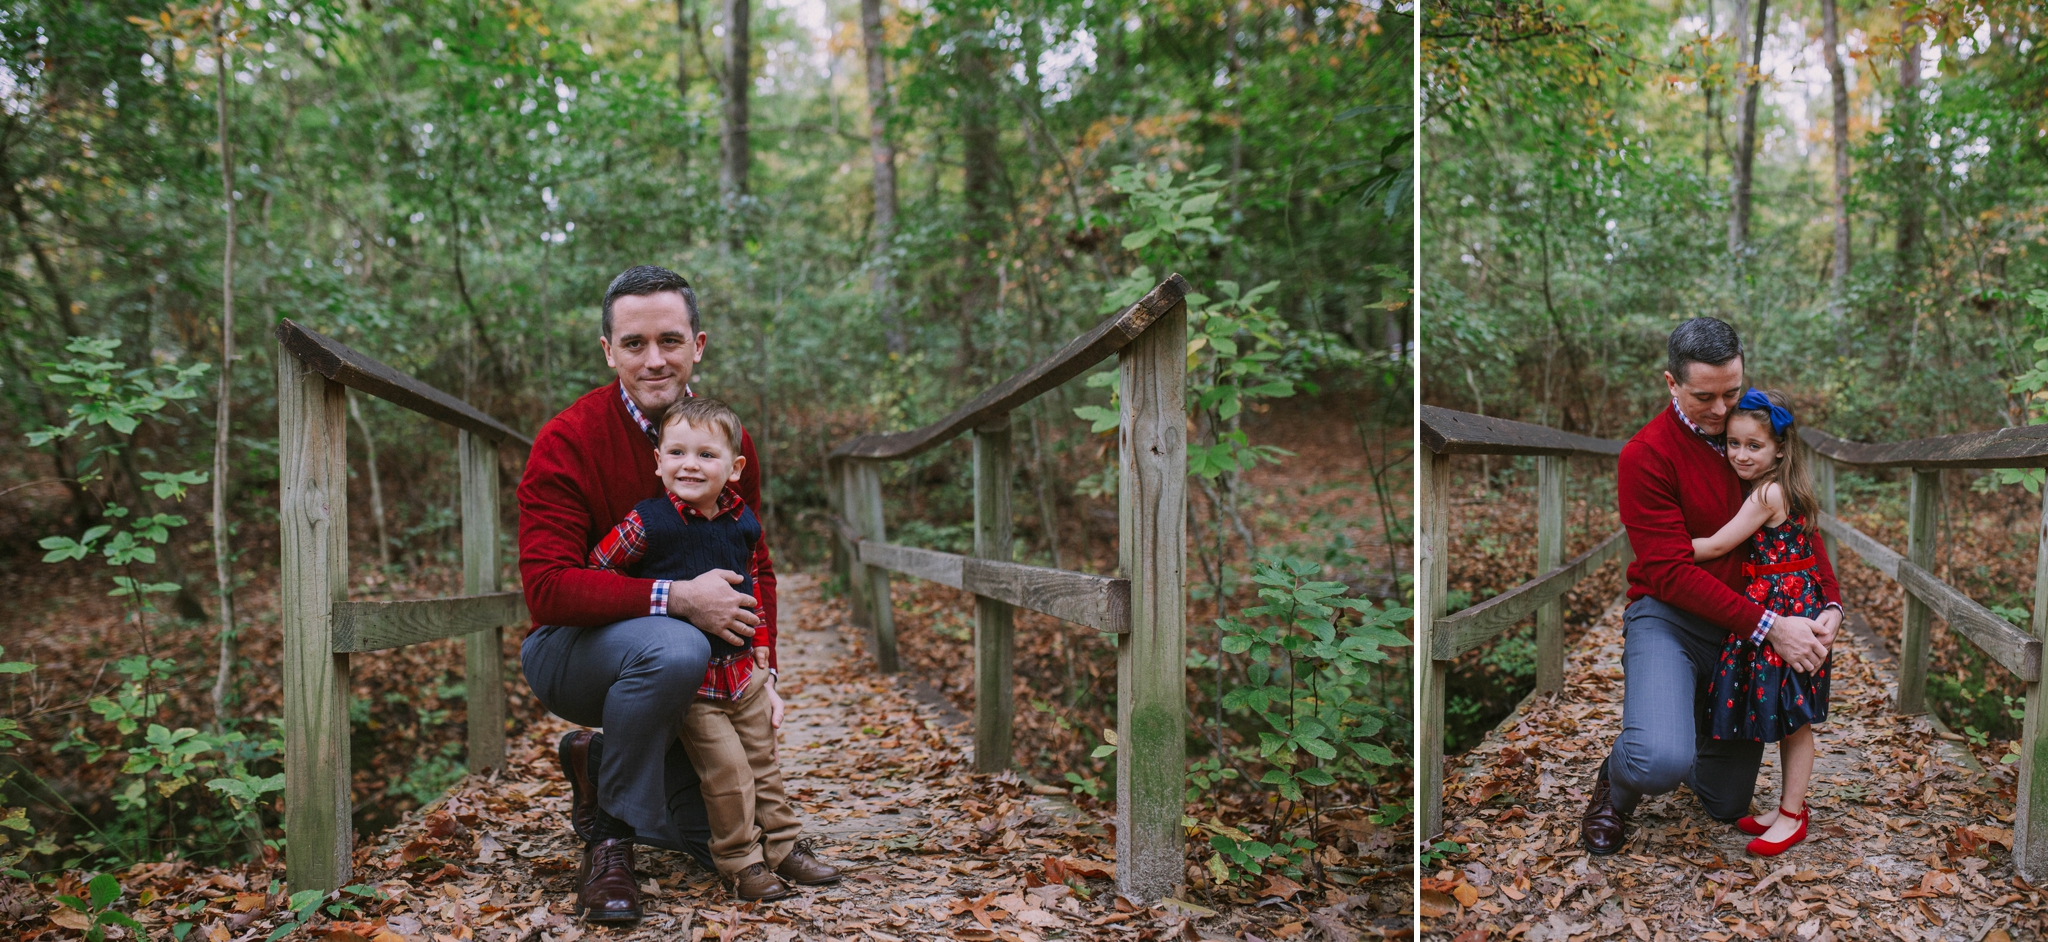 Ryan's - Family Photographer at Clark Park in Fayetteville, North Carolina